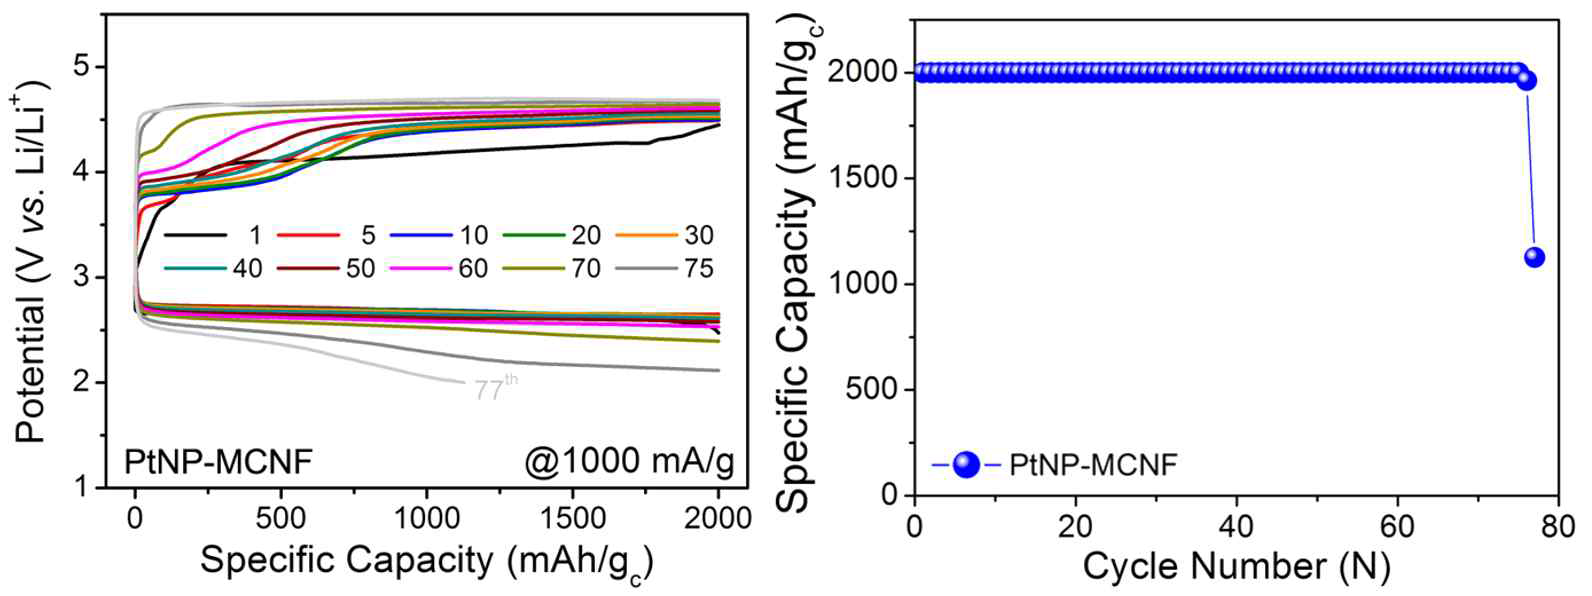 PtNP-MCNF 전극을 이용한 리튬-공기 전지의 전류밀도 1,000 mA/gc, 용량 cut-off 2,000 mAh/gc에서 (좌) 충방전 전압 곡선, (우) 수명 특성 그래프